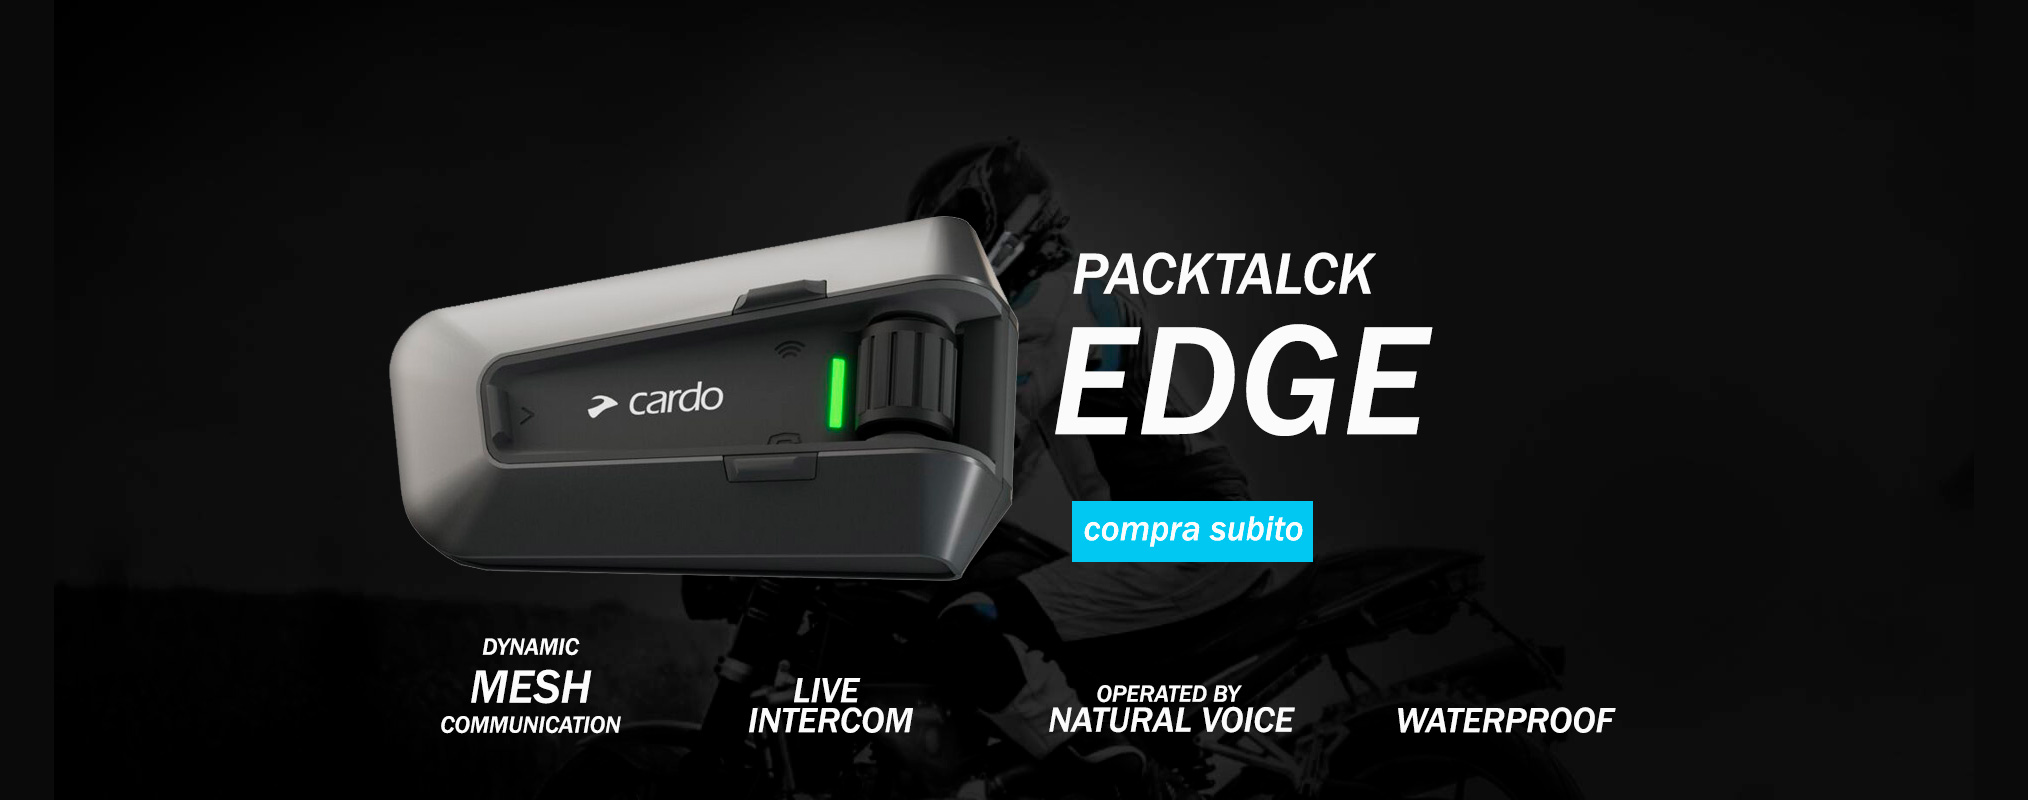 Cardo Packtalk Edge